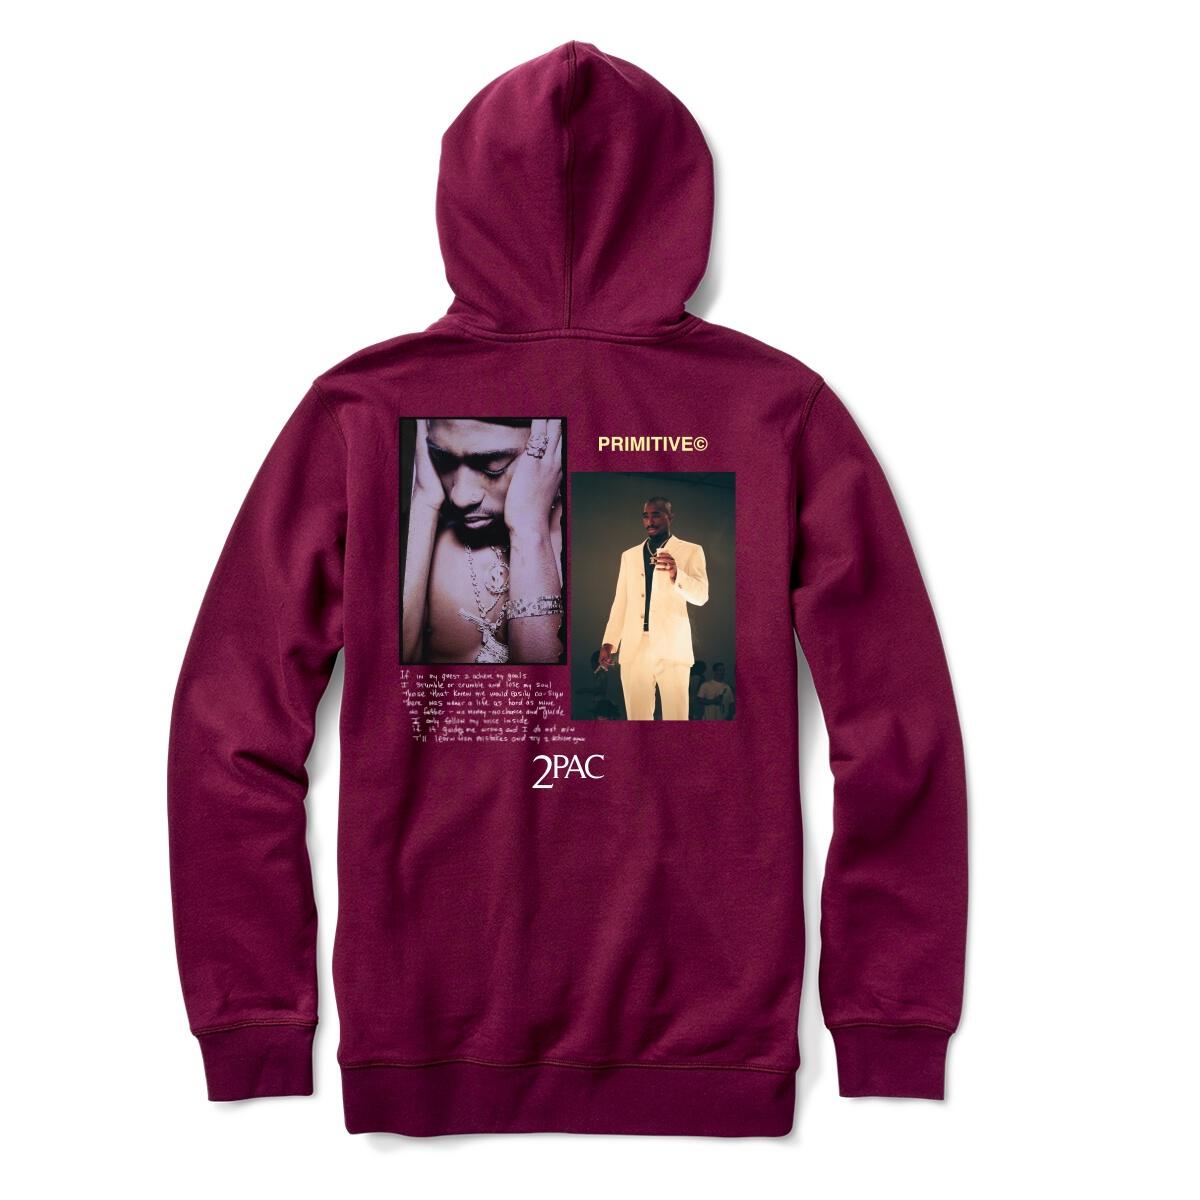 Primitive x Tupac Shakur Voice Pullover Hooded Sweatshirt - The Dark Slide